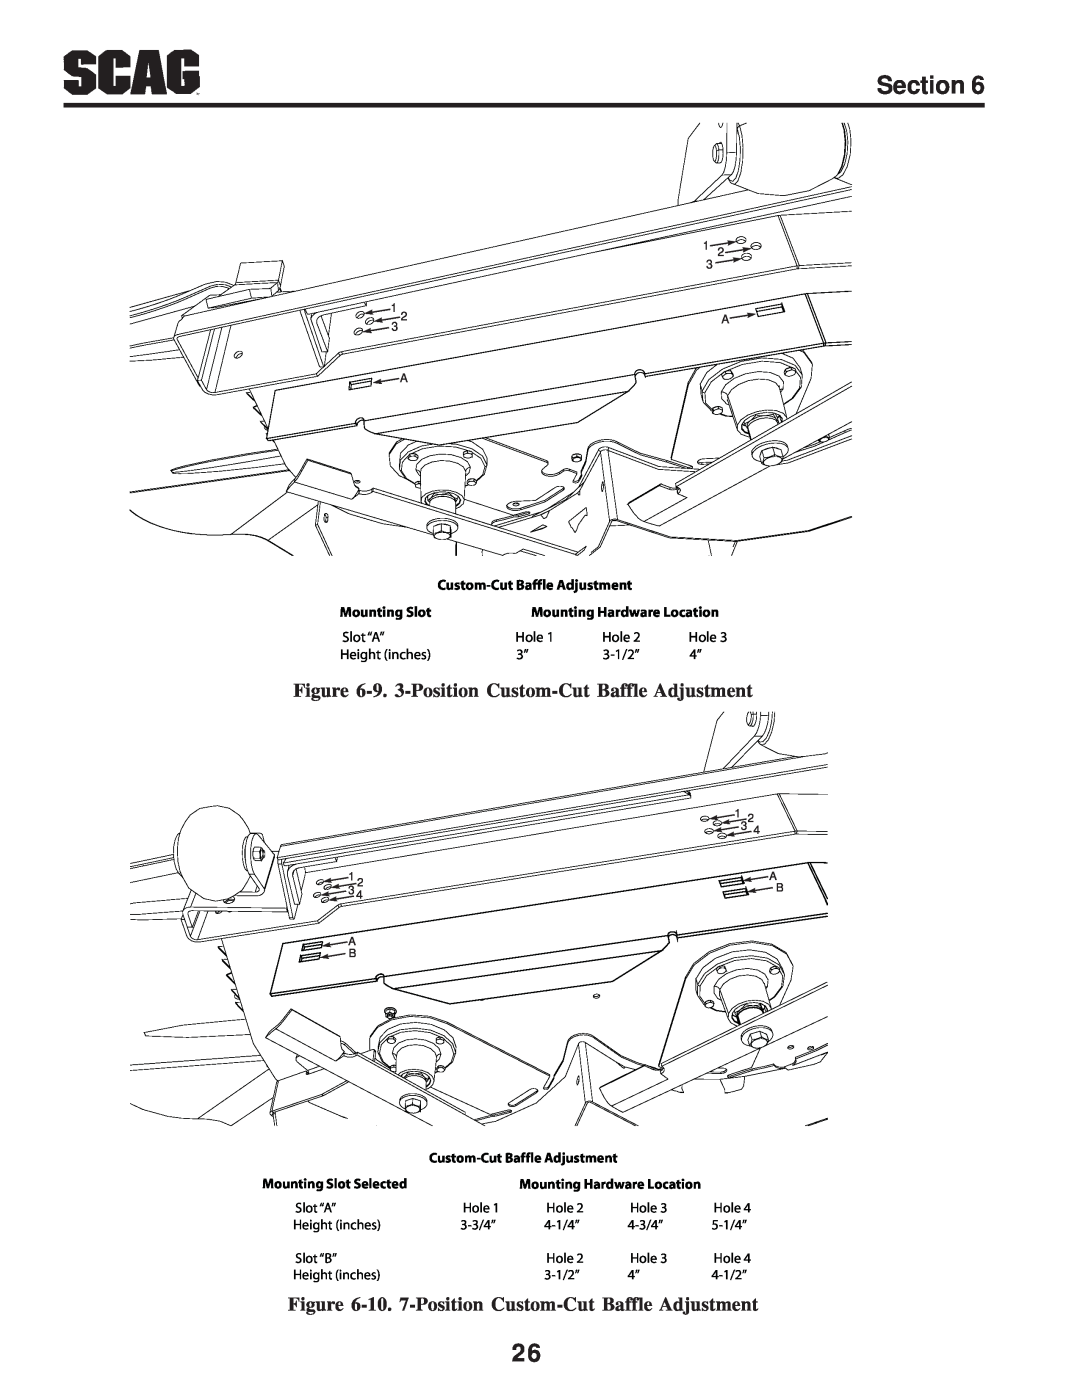 Scag Power Equipment SWZV manual 9. 3-Position Custom-Cut Baffle Adjustment, 10. 7-Position Custom-Cut Baffle Adjustment 